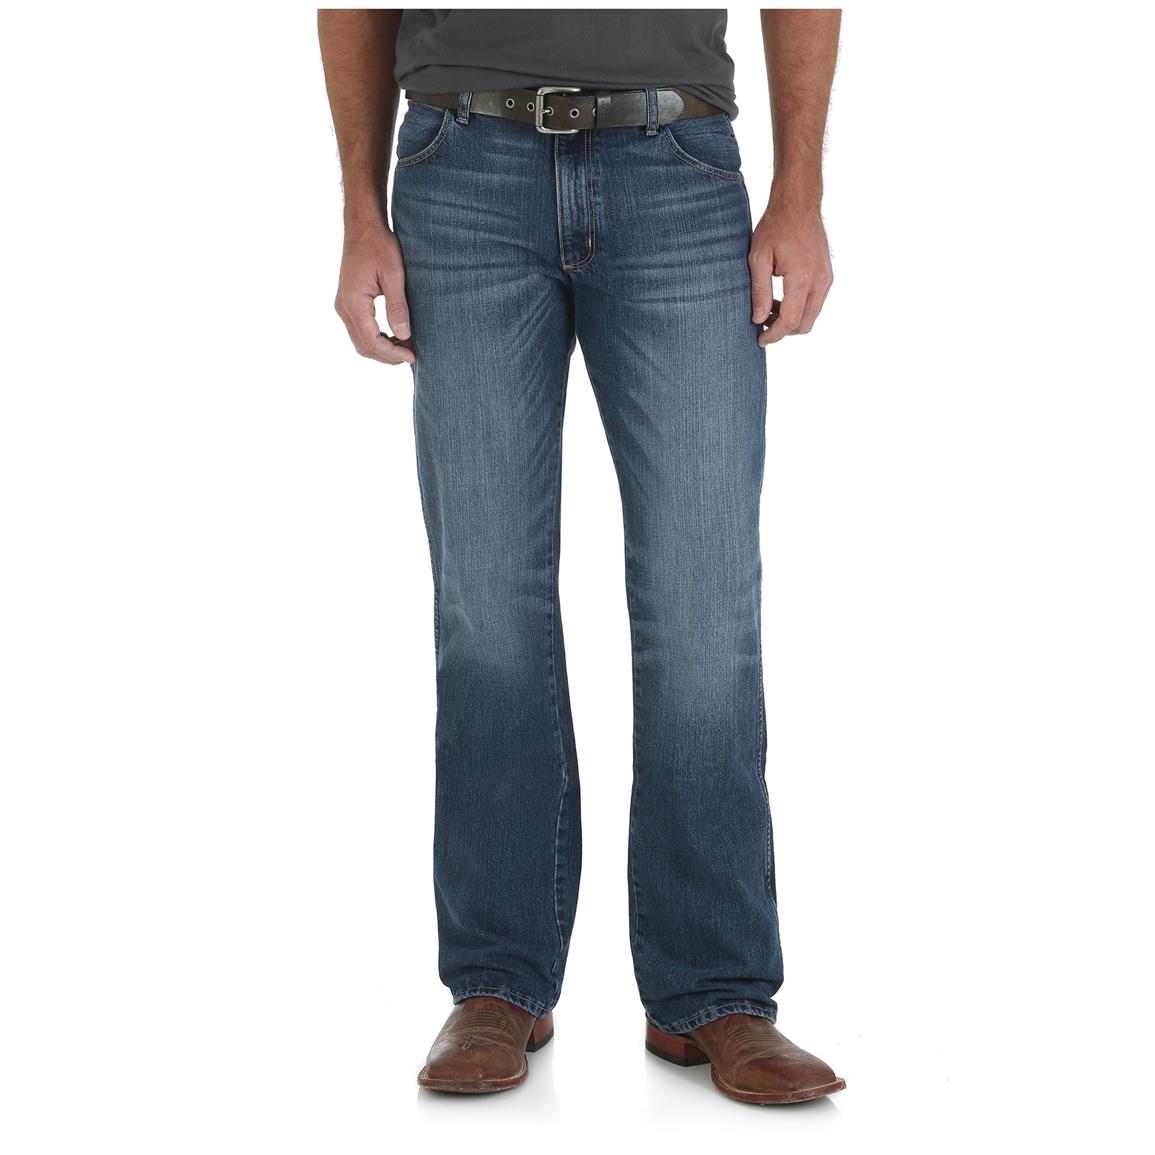 Wrangler Men's Retro Slim Fit Bootcut Jeans, Scottsdale